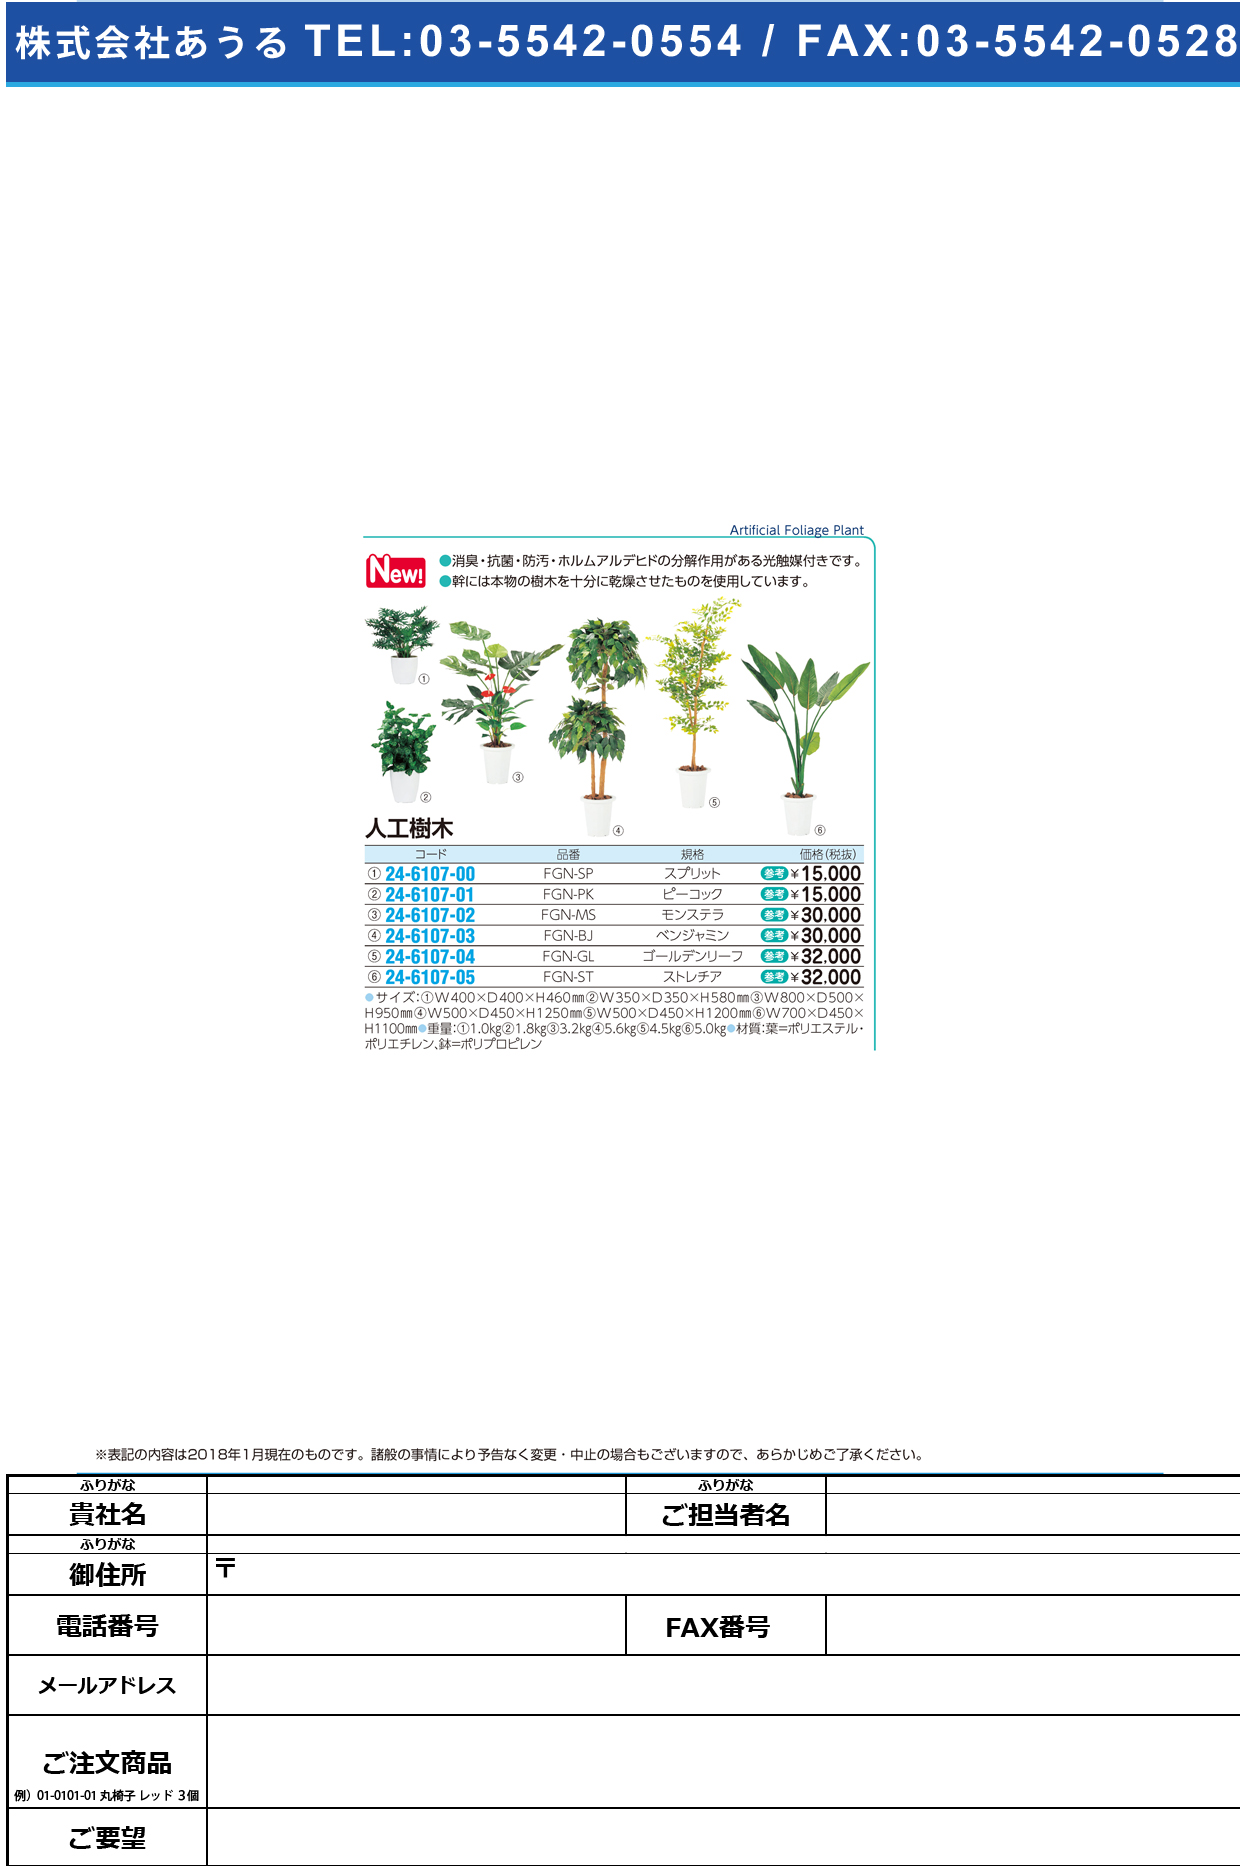 (24-6107-05)人工樹木 FGN-ST(ｽﾄﾚﾁｱ) ｼﾞﾝｺｳｼﾞｭﾓｸ【1個単位】【2019年カタログ商品】